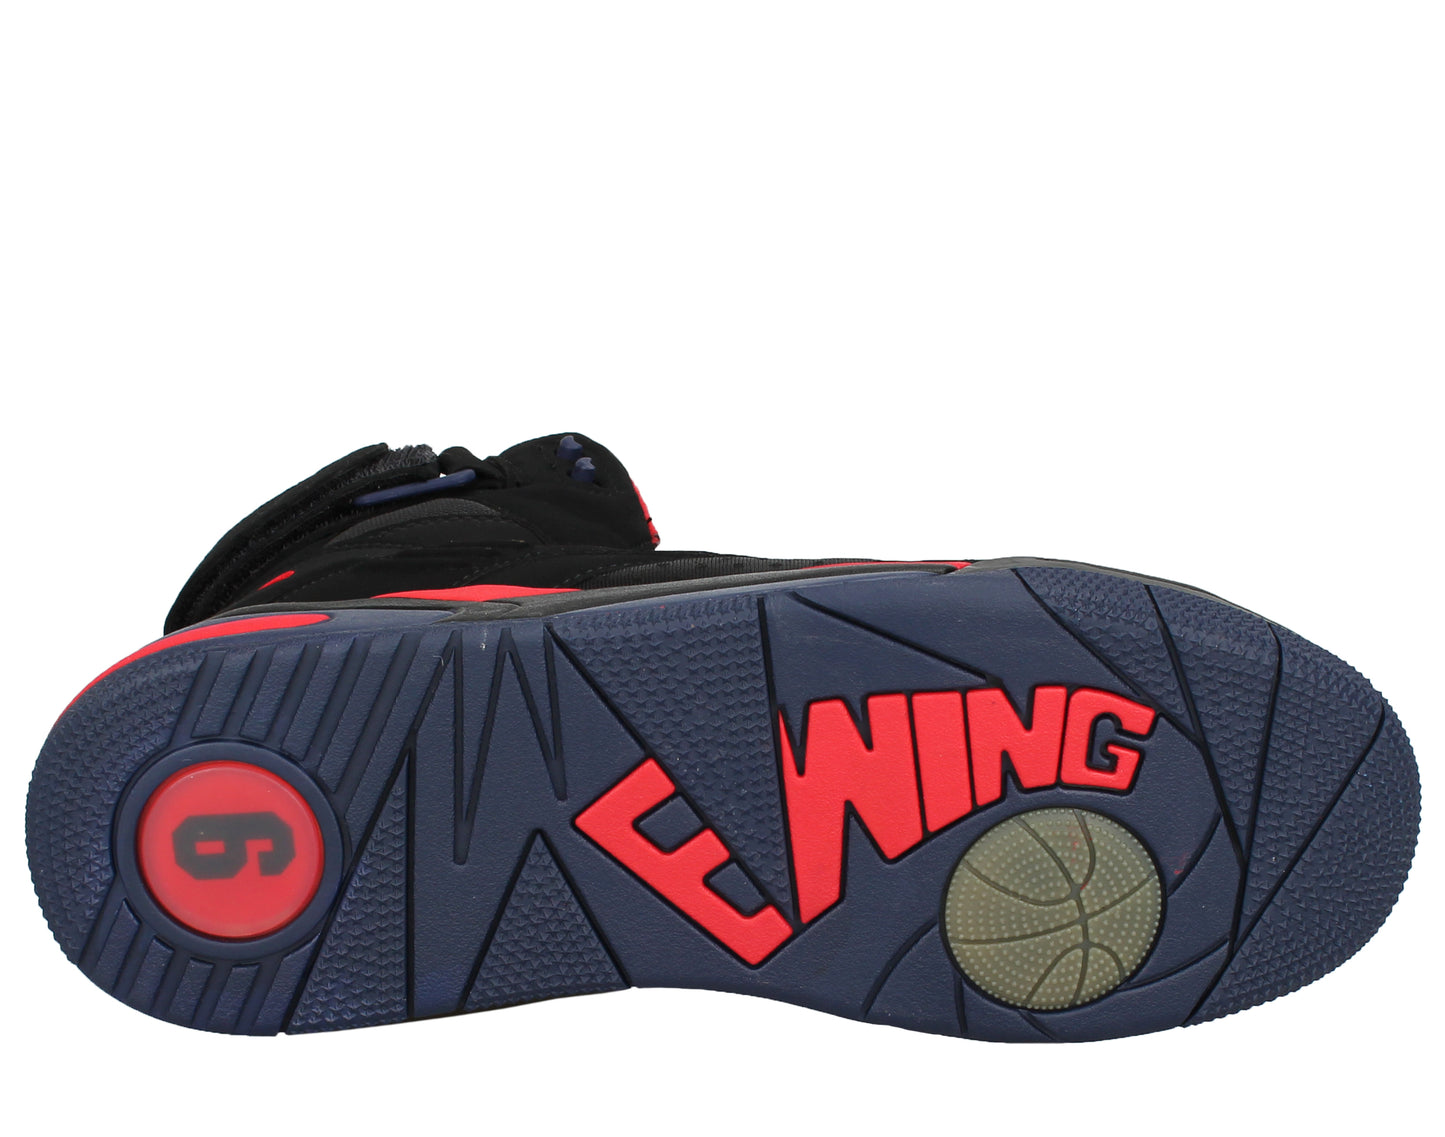 Ewing Athletics Ewing Eclipse Men's Basketball Shoes